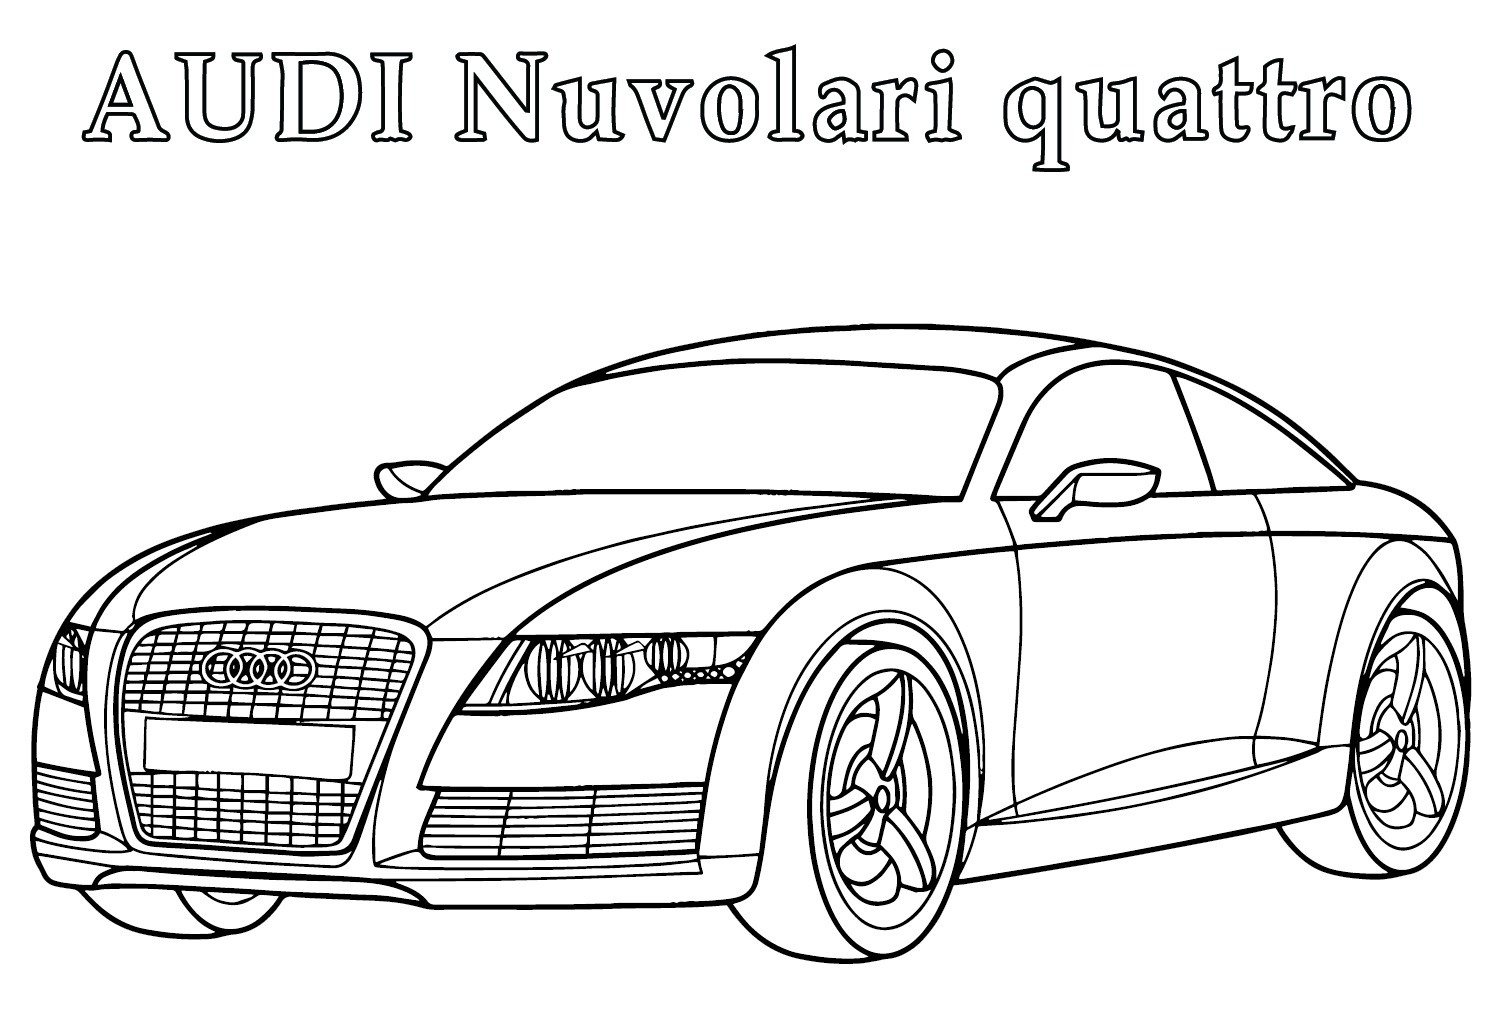 Audi Nuvolari Quattro Coloring Page from Audi